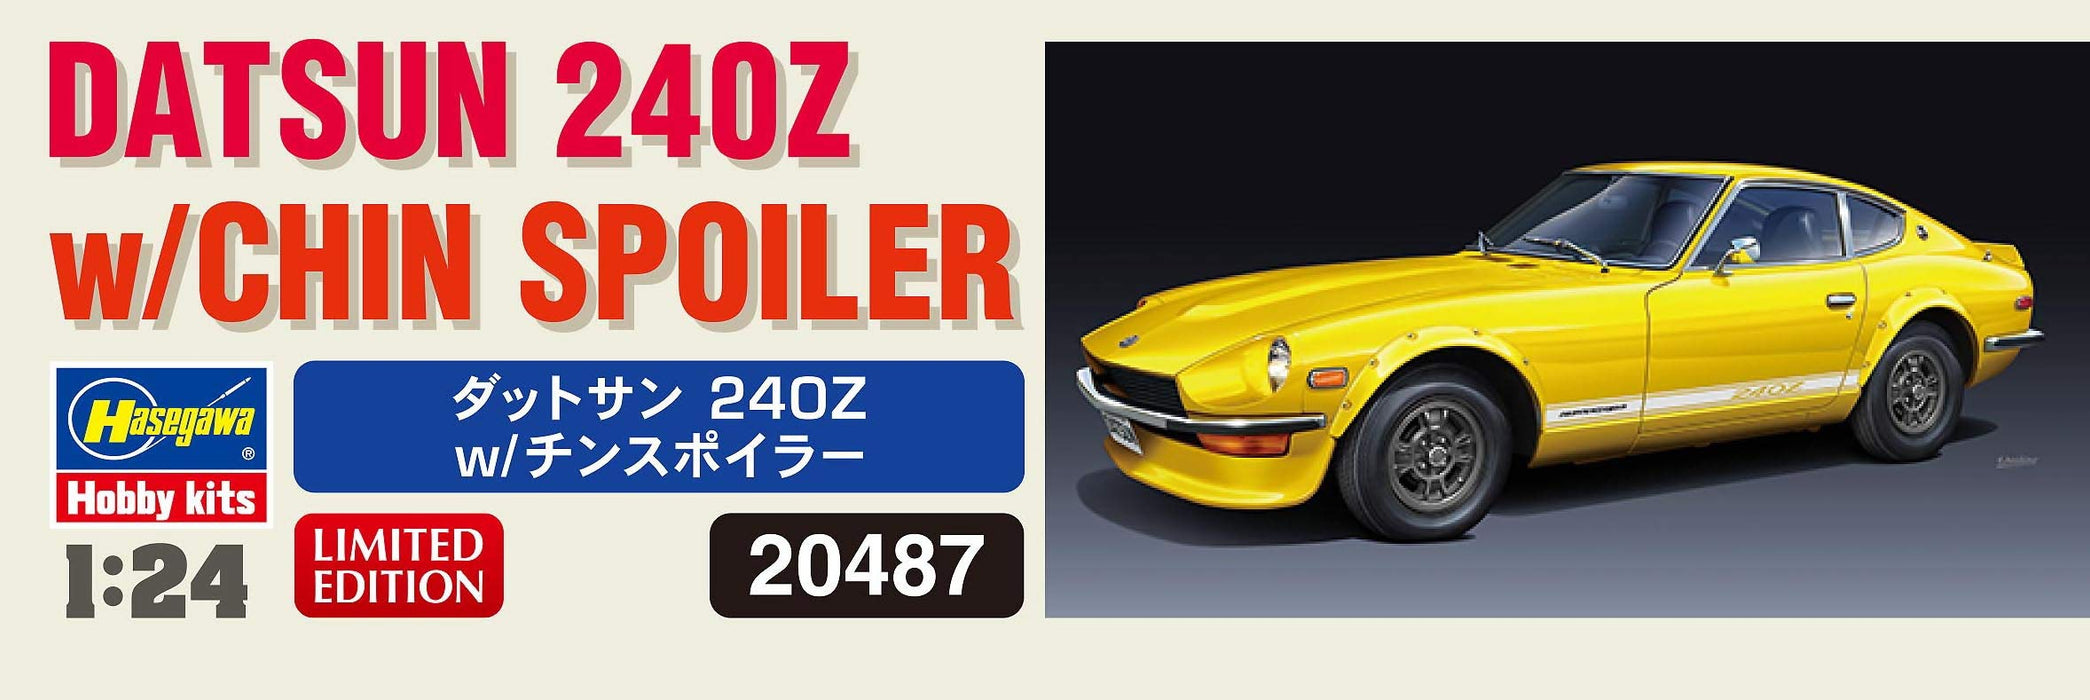 Hasegawa 1 /24 Datsun 240Z W/Chin Spoiler Japanese Scale Car Toys Plastic Model Kit